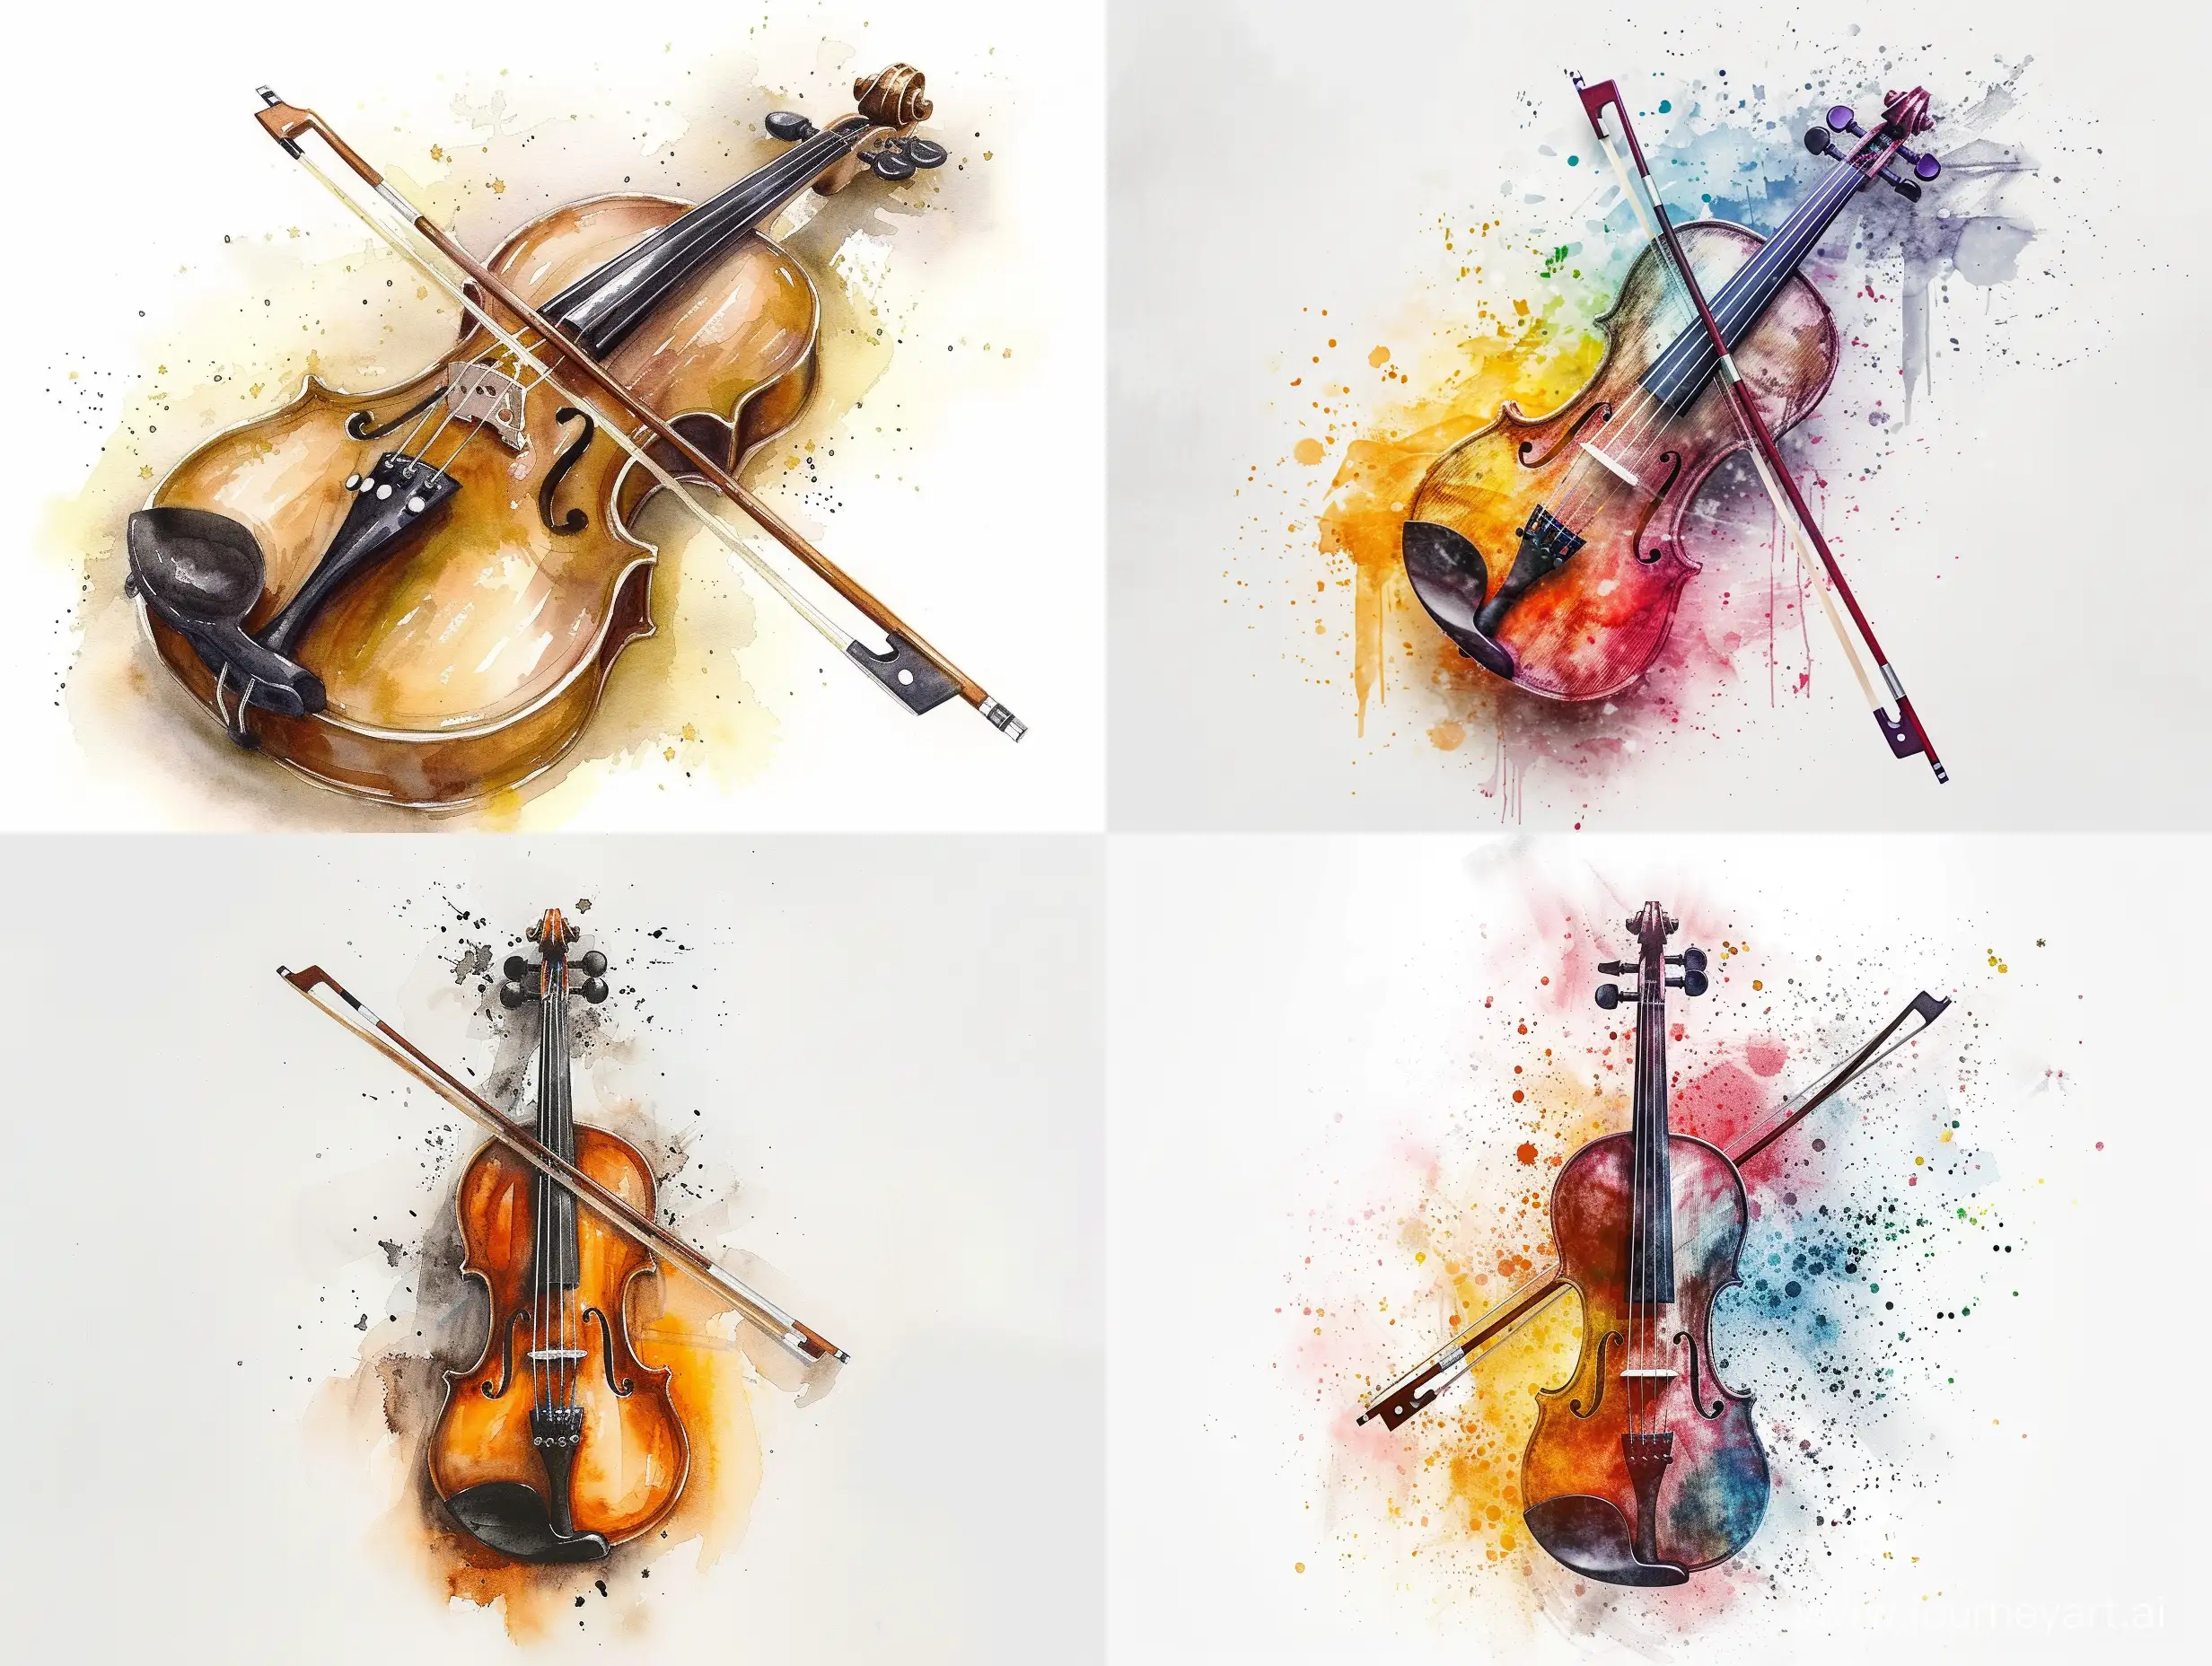 Seasonal-Symphony-Vibrant-Watercolor-Painting-of-a-Violin-in-Four-Seasons